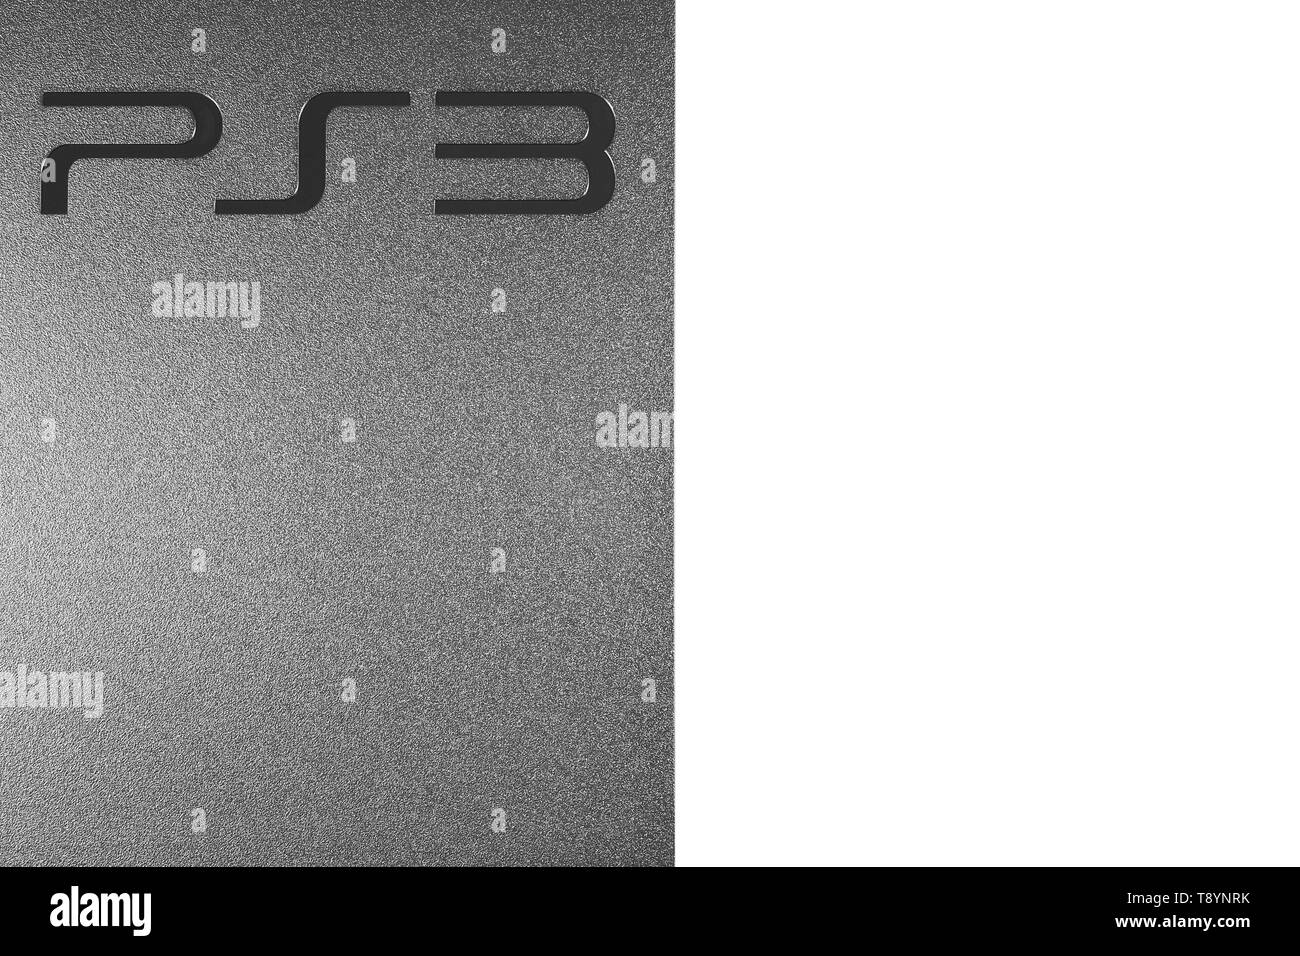 Sony Playstation 3 PS3-Spiele Konsole. Stockfoto